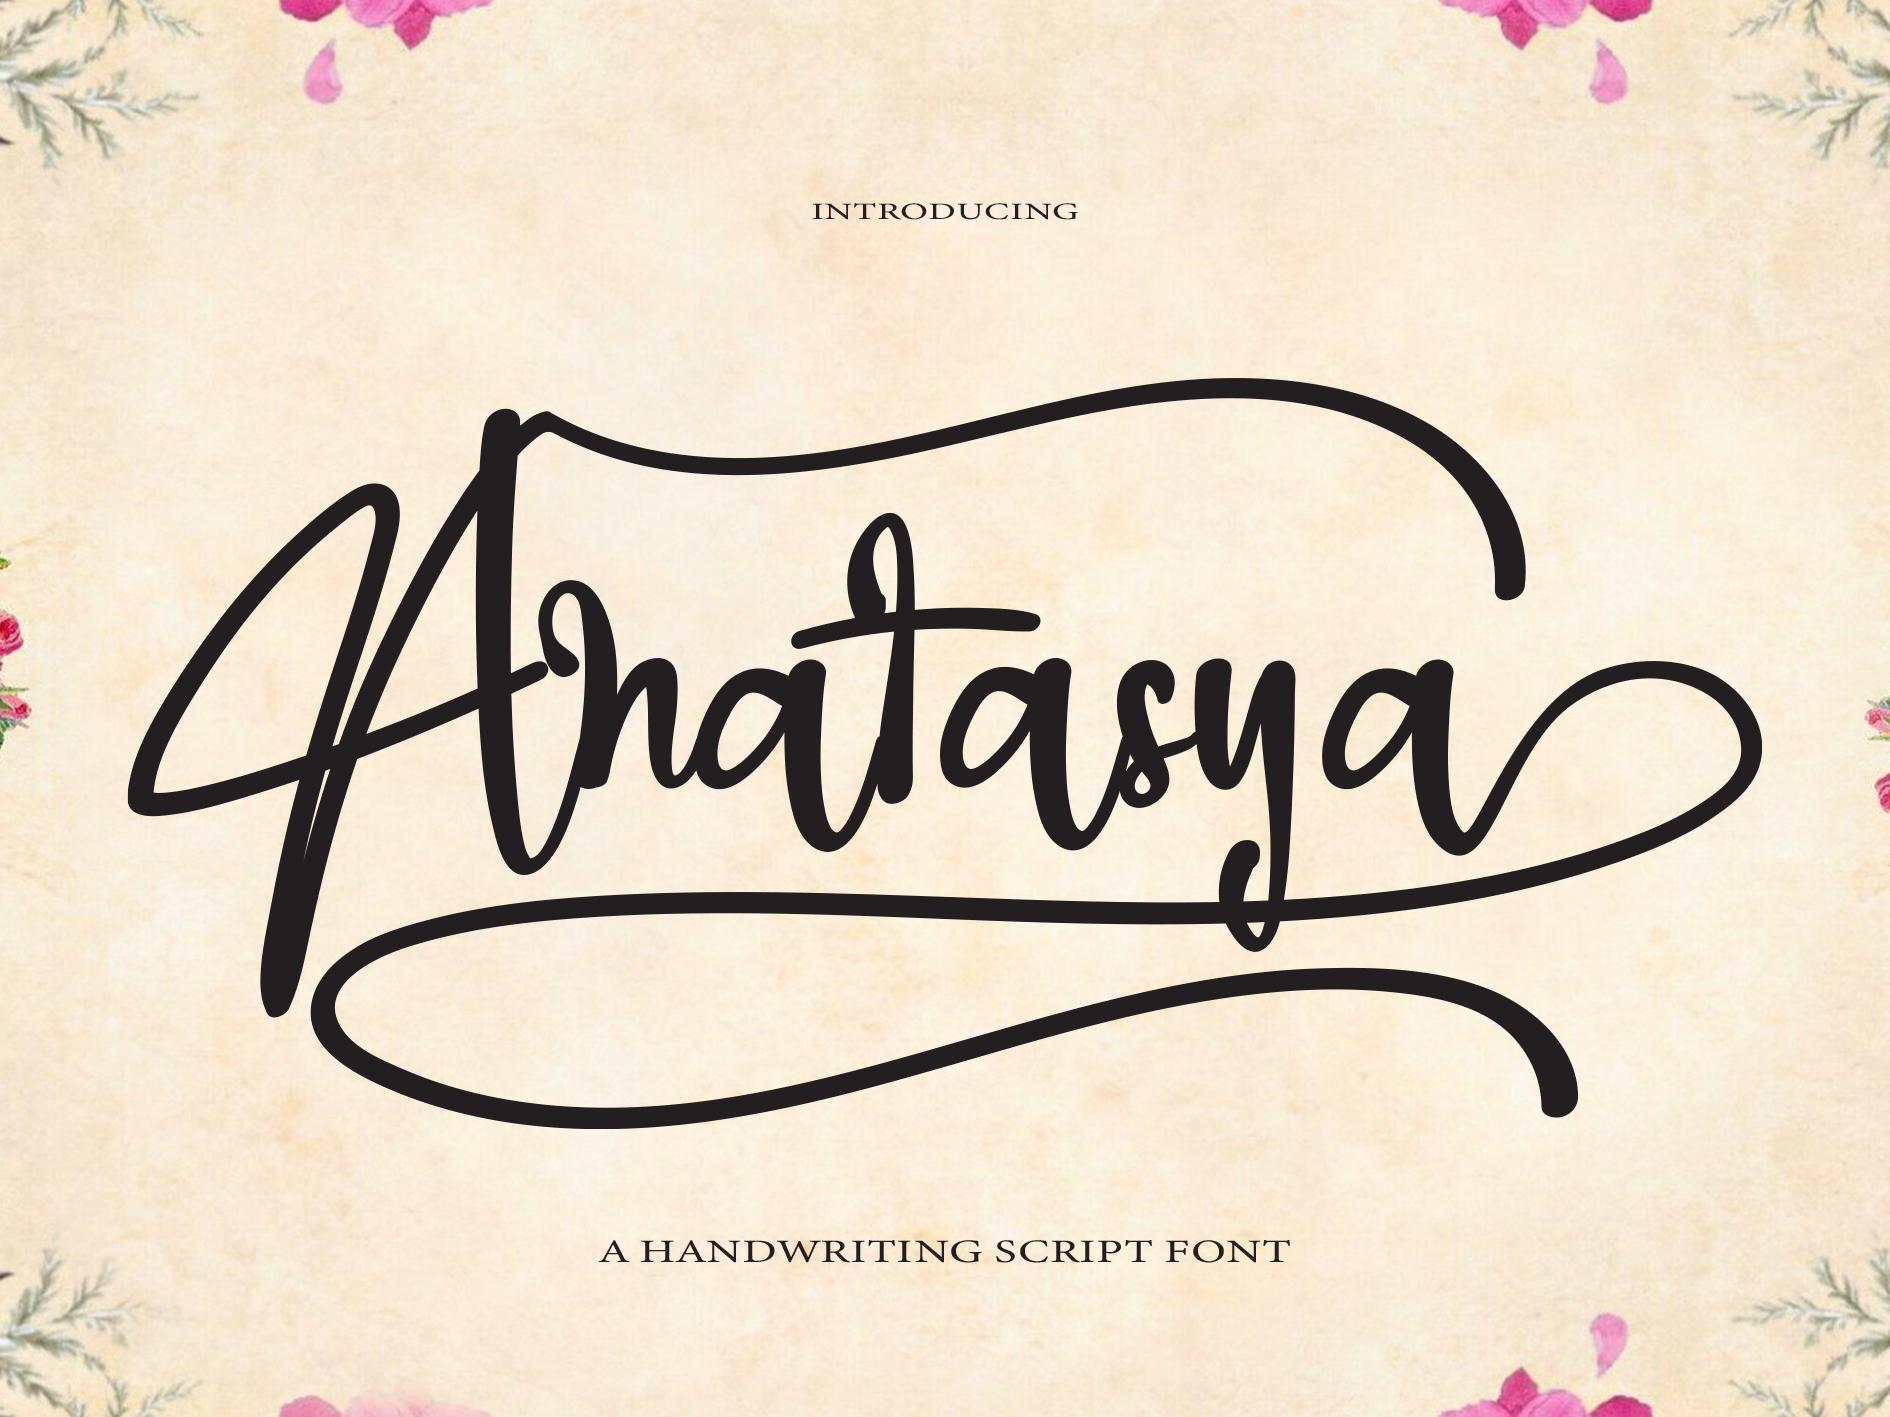 Anatasya Font